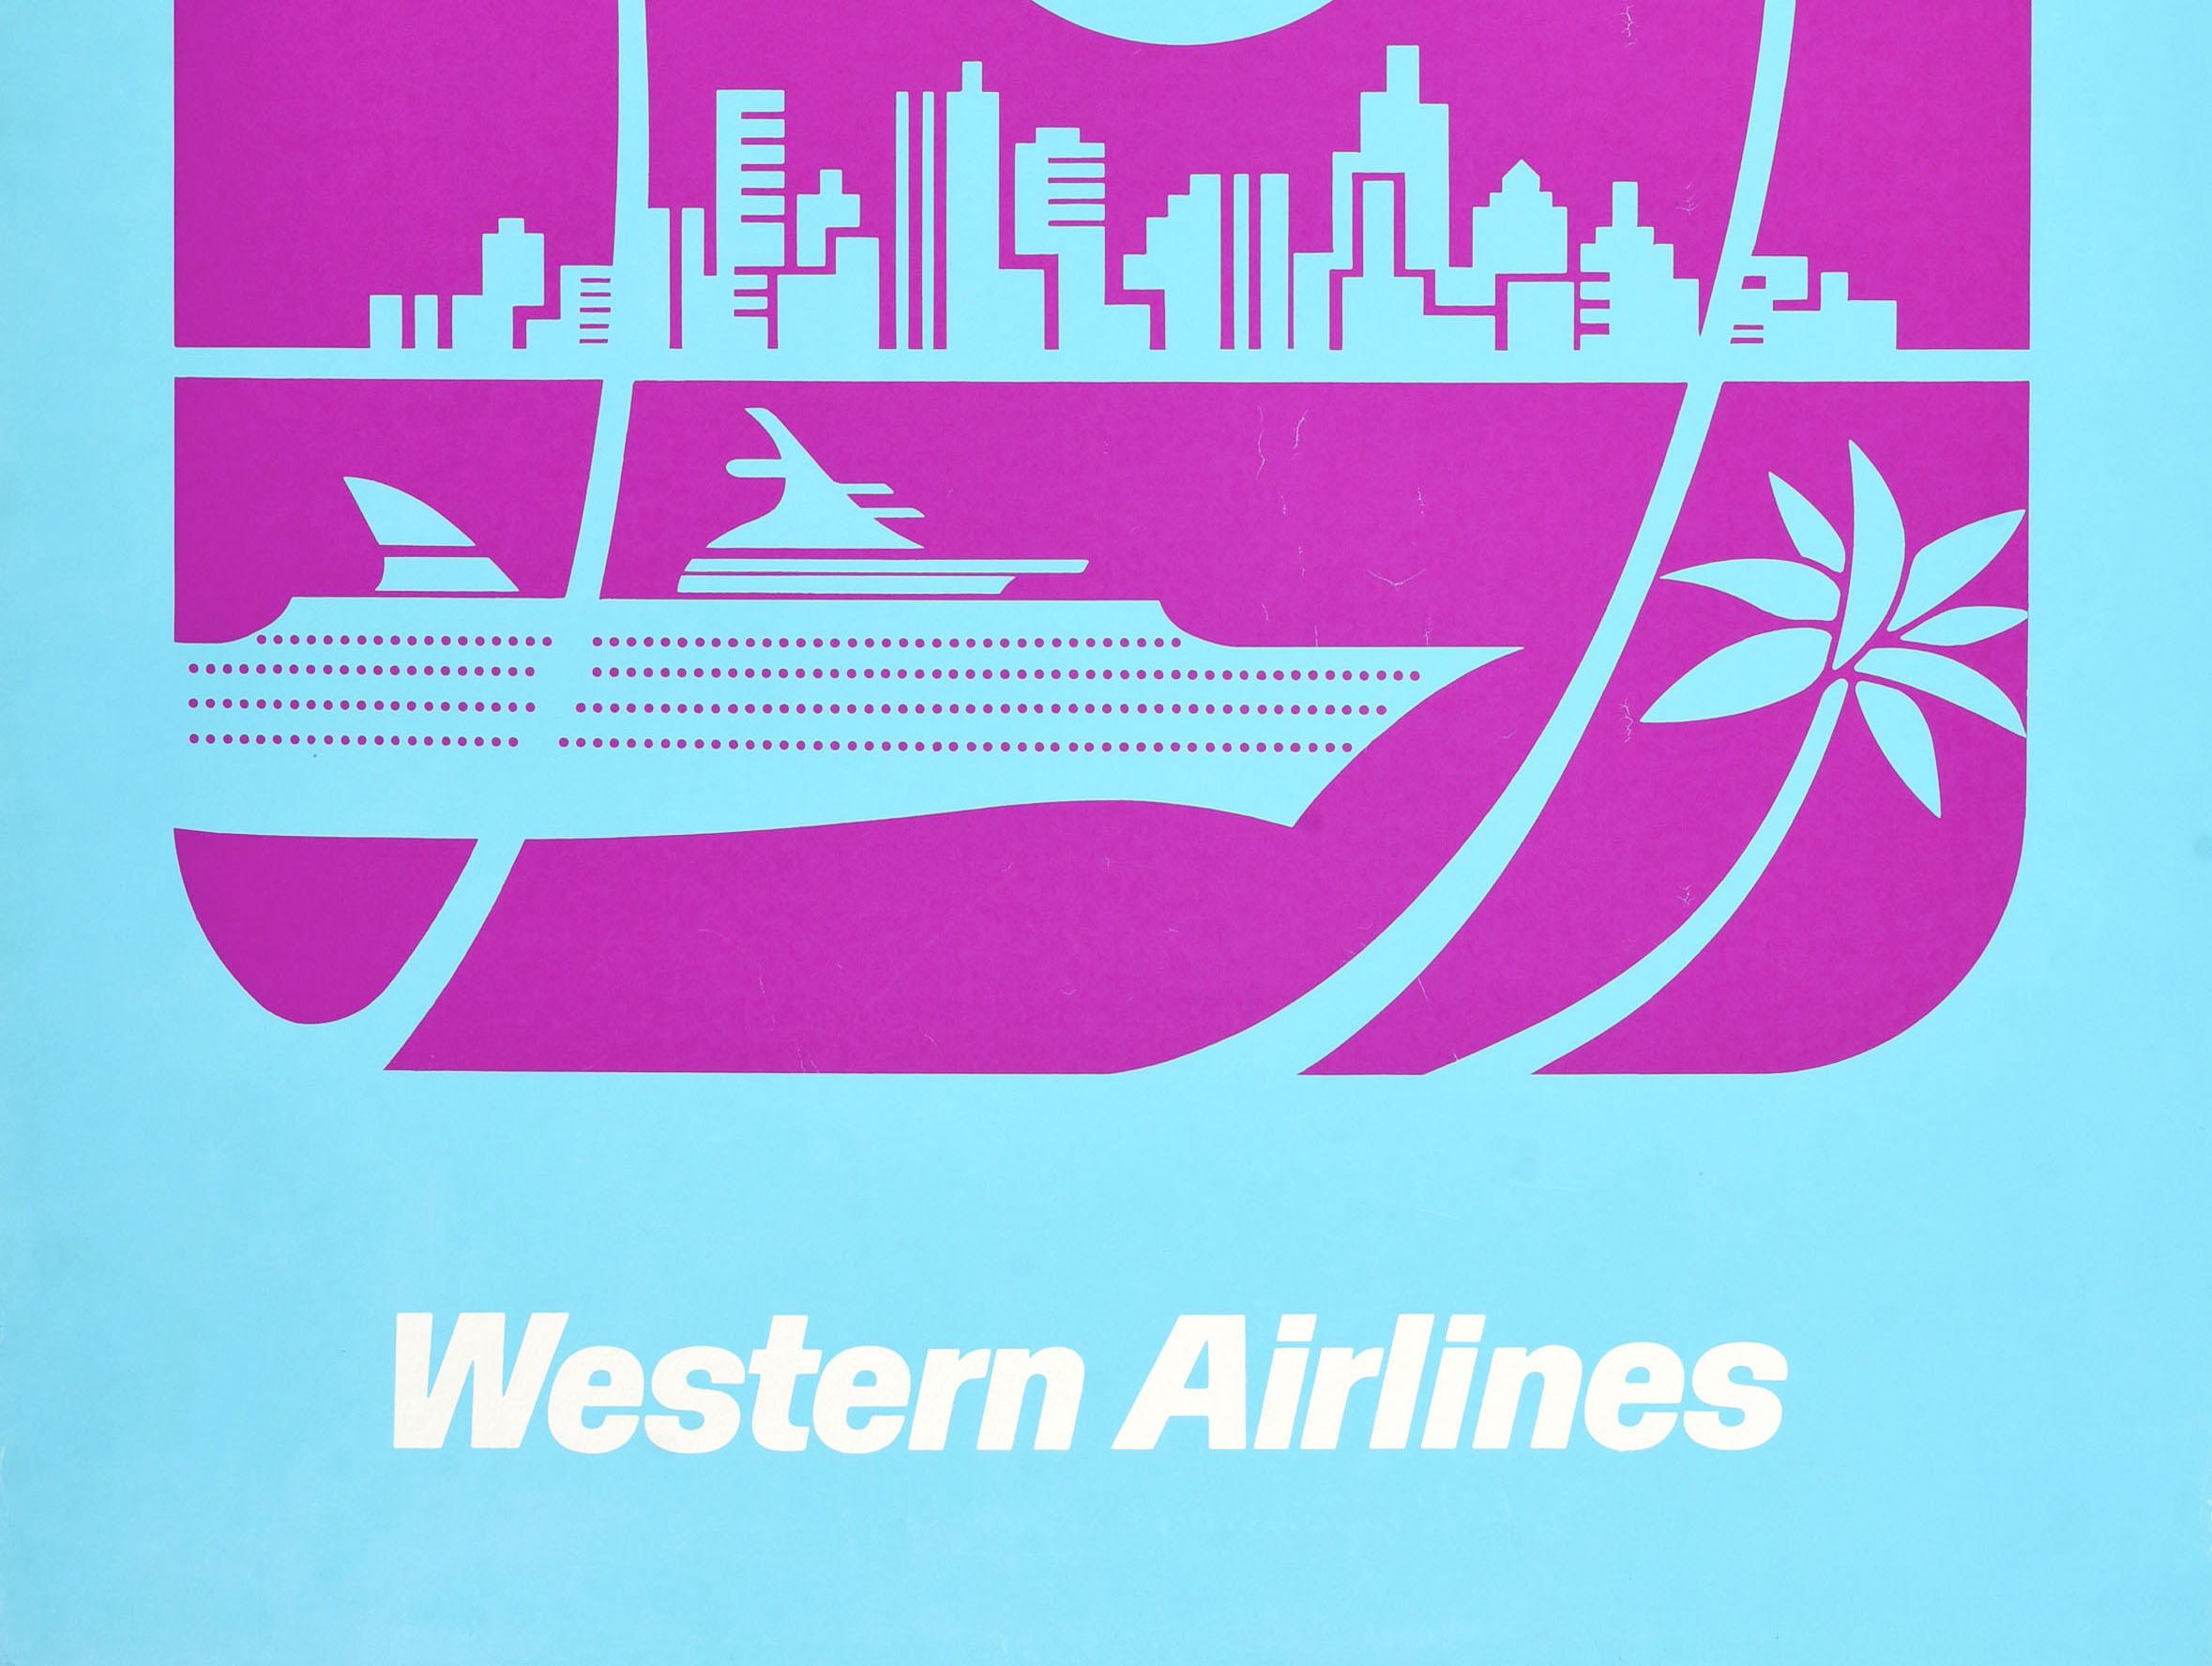 American Original Vintage Travel Poster Florida Bahamas Caribbean Western Airlines Palm